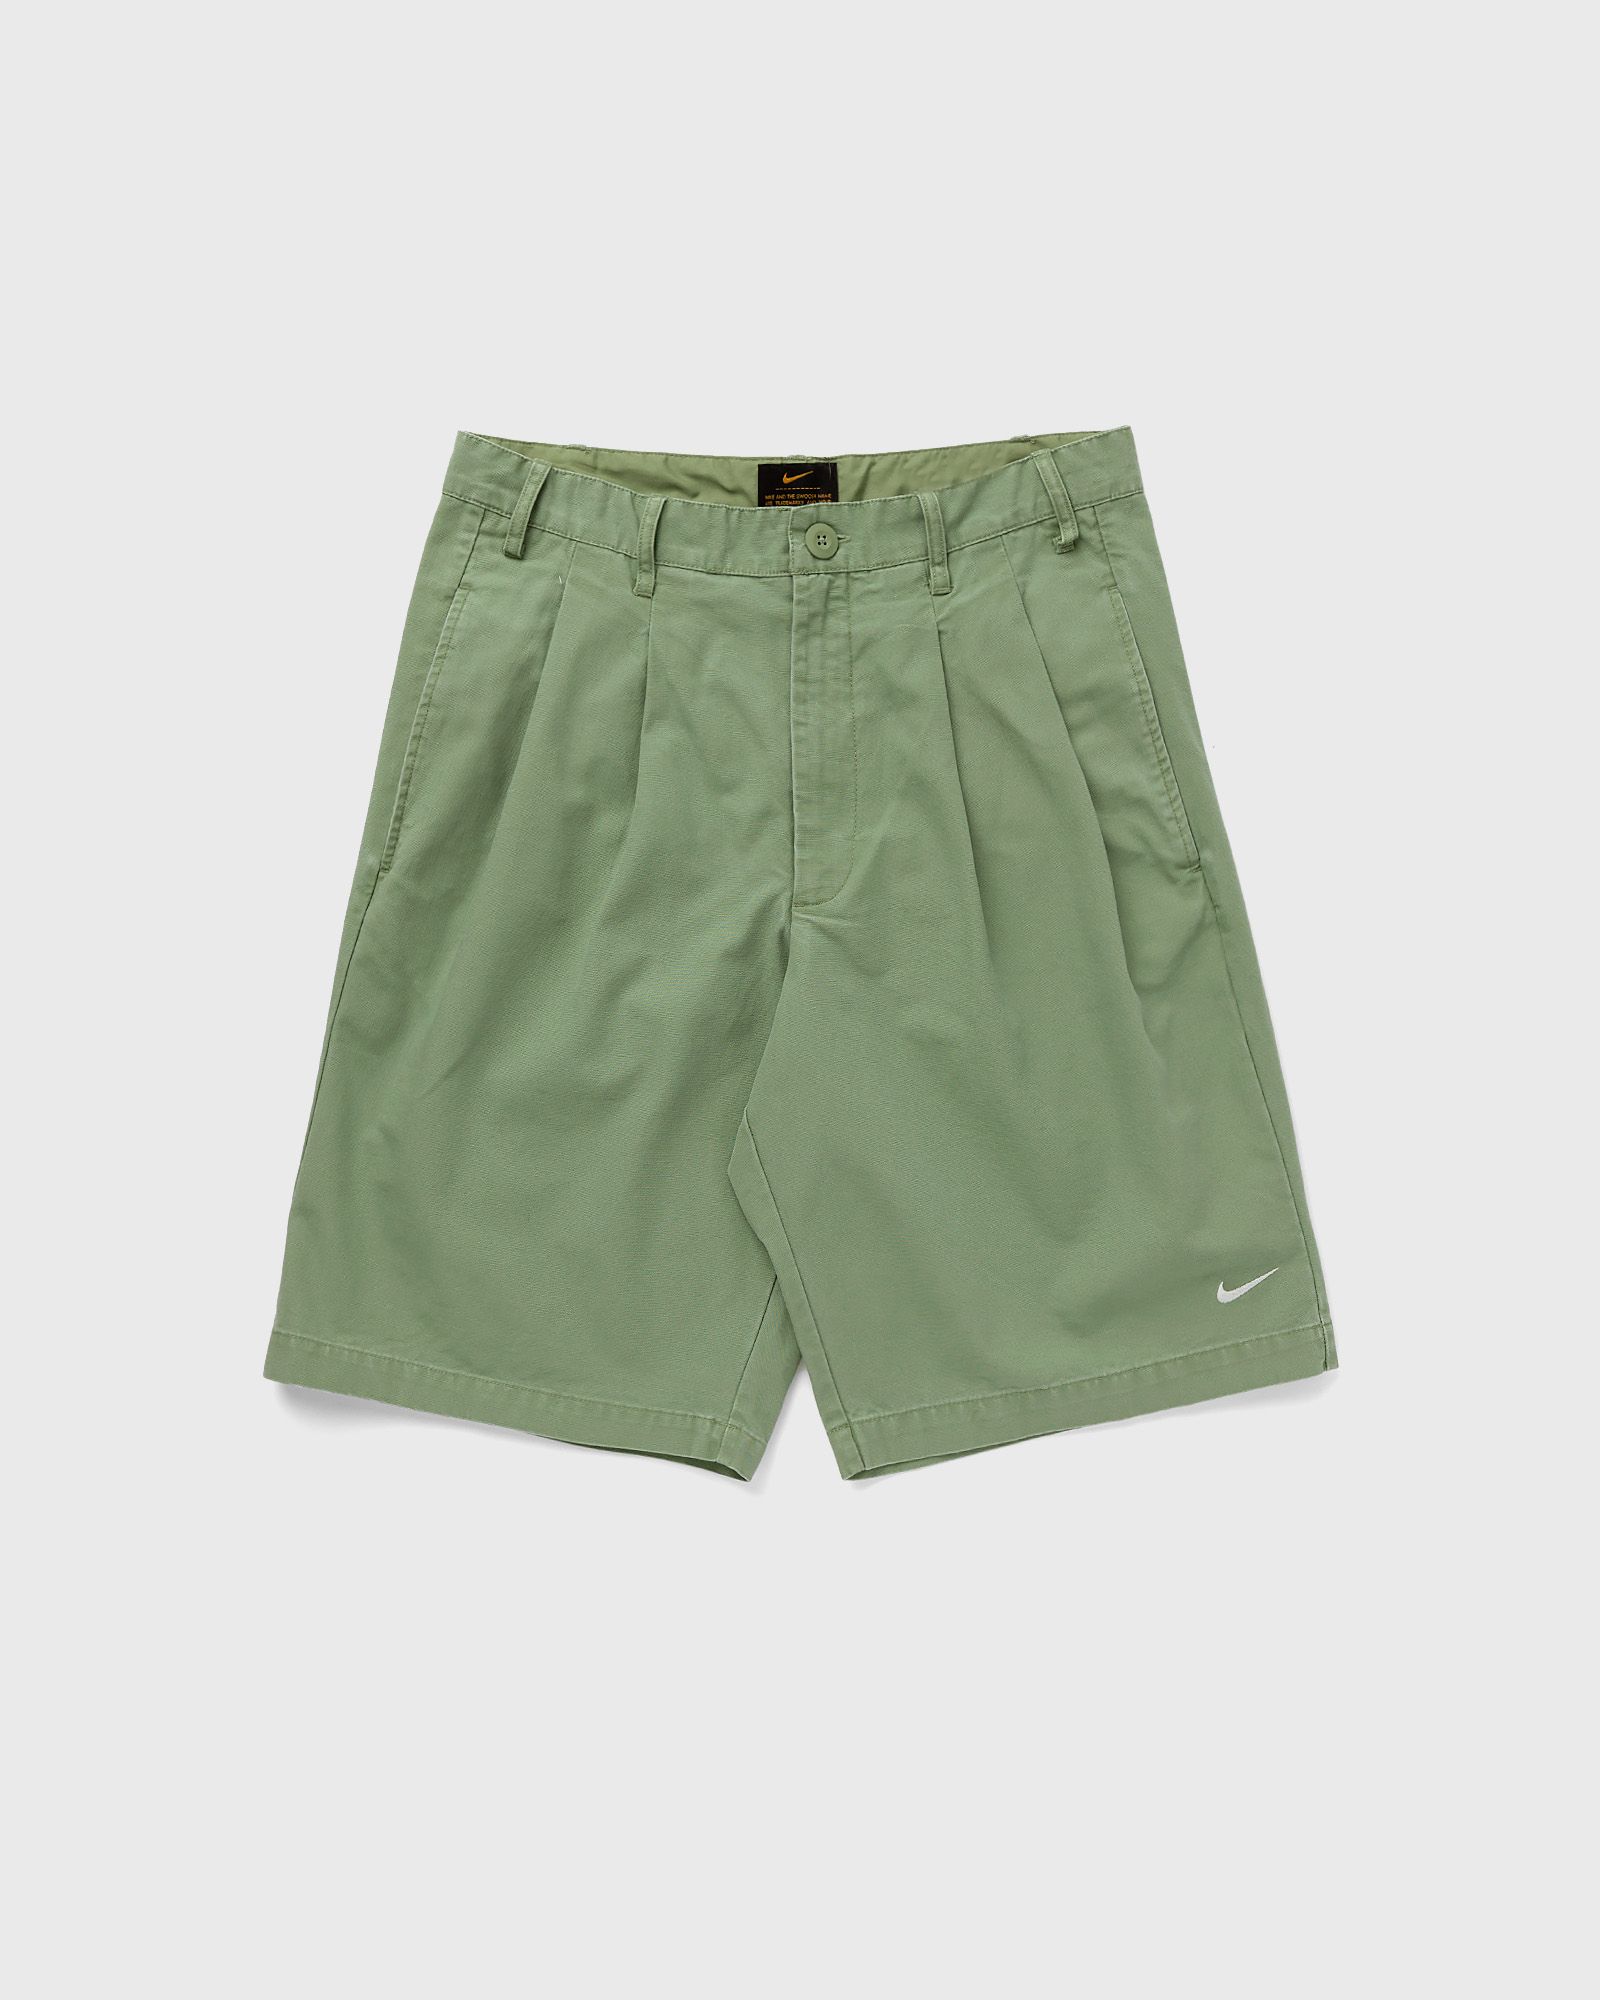 Nike - pleated chino shorts men casual shorts green in größe:xxl